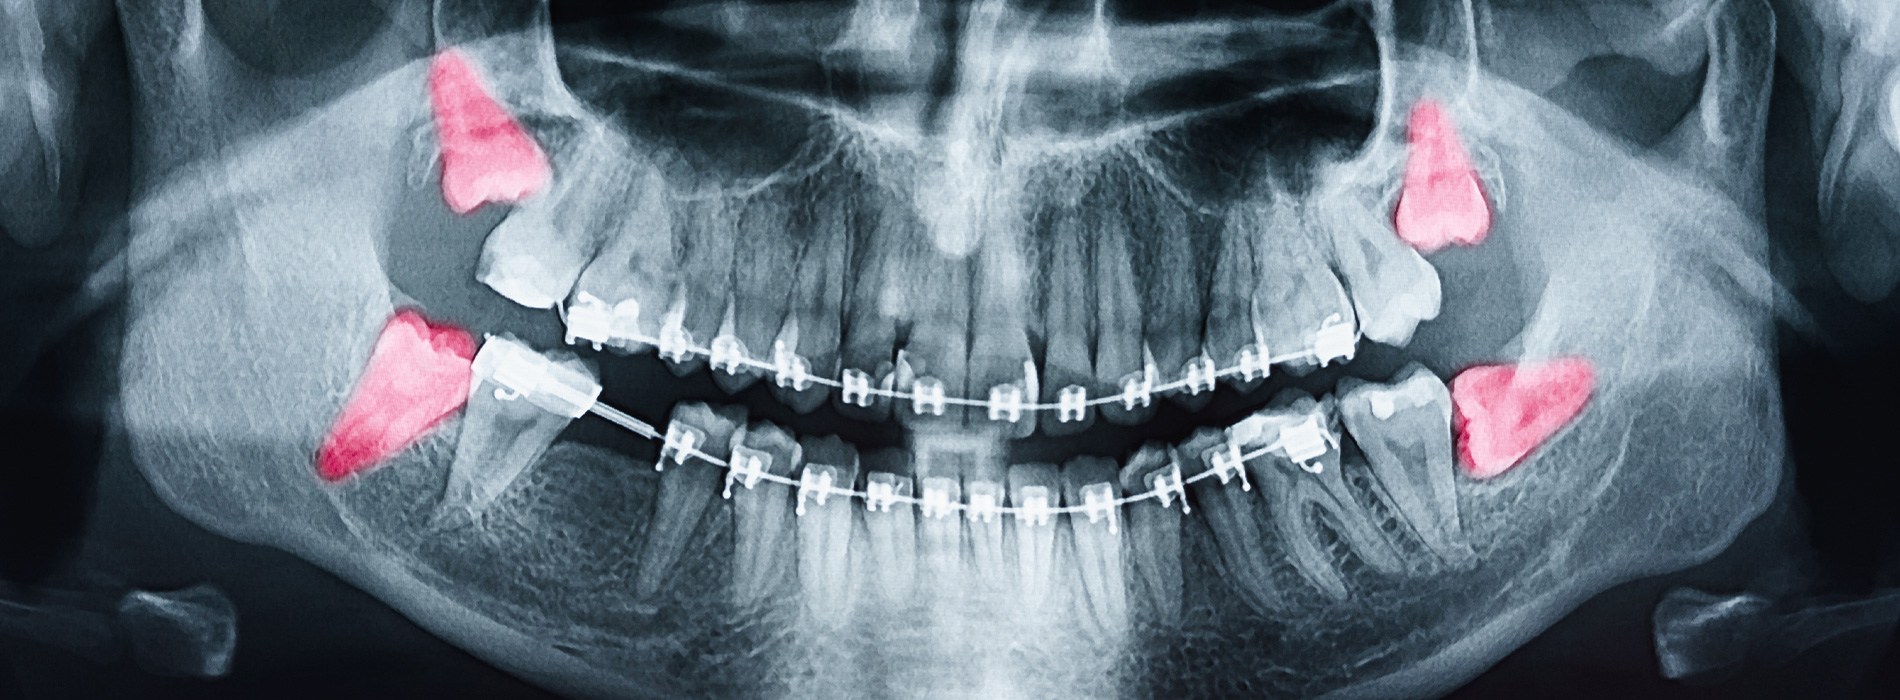 Dental Implants North Andover